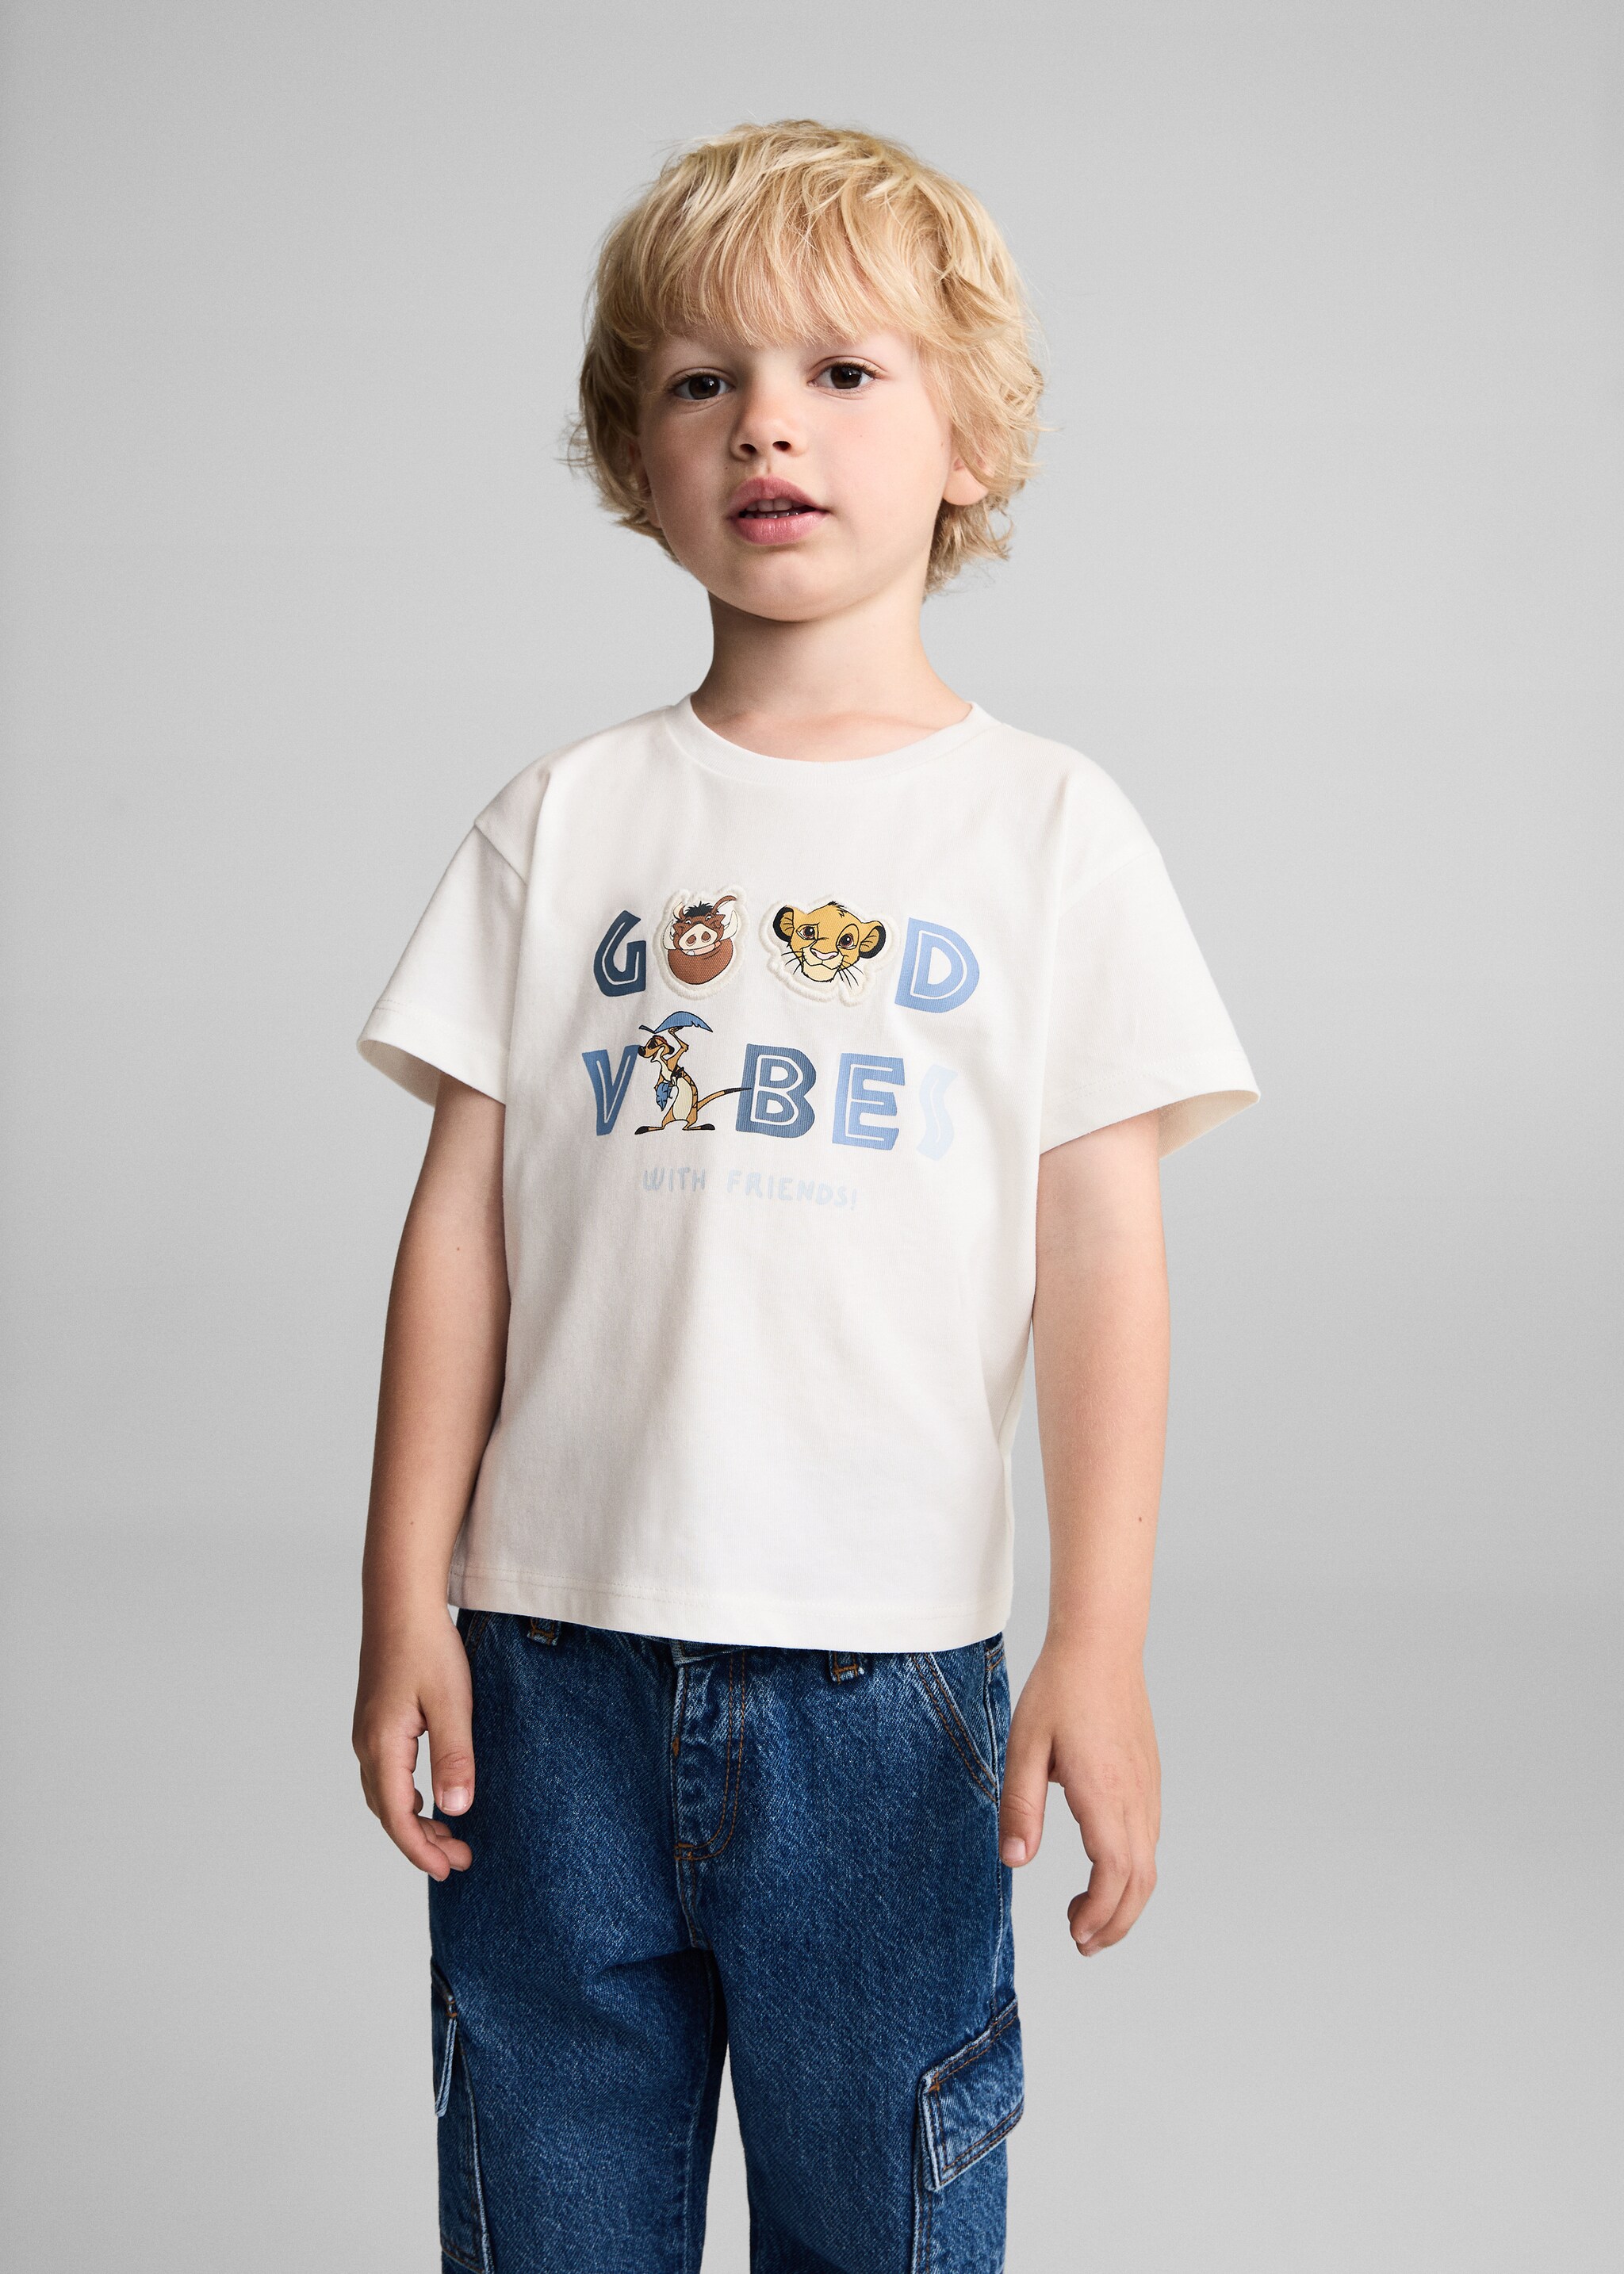 The Lion King t-shirt - Medium plane